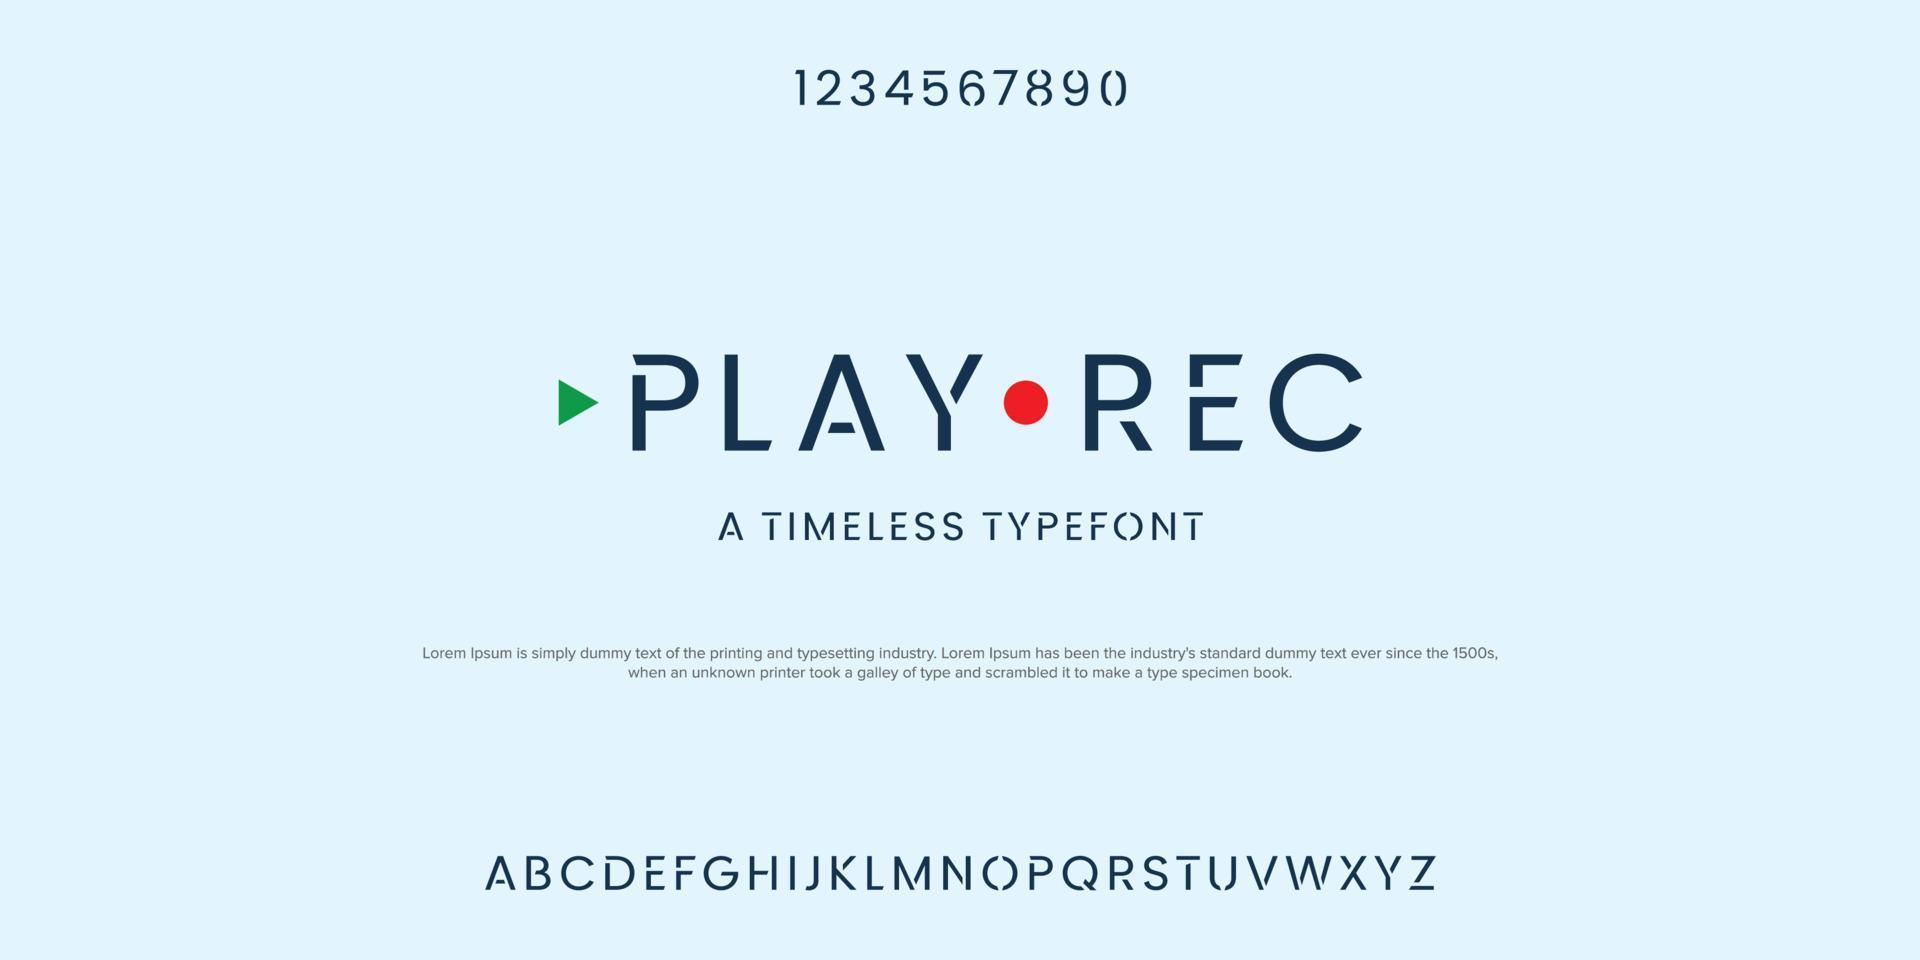 PLAY REC Modern alphabet font set a to z typography designs. vector